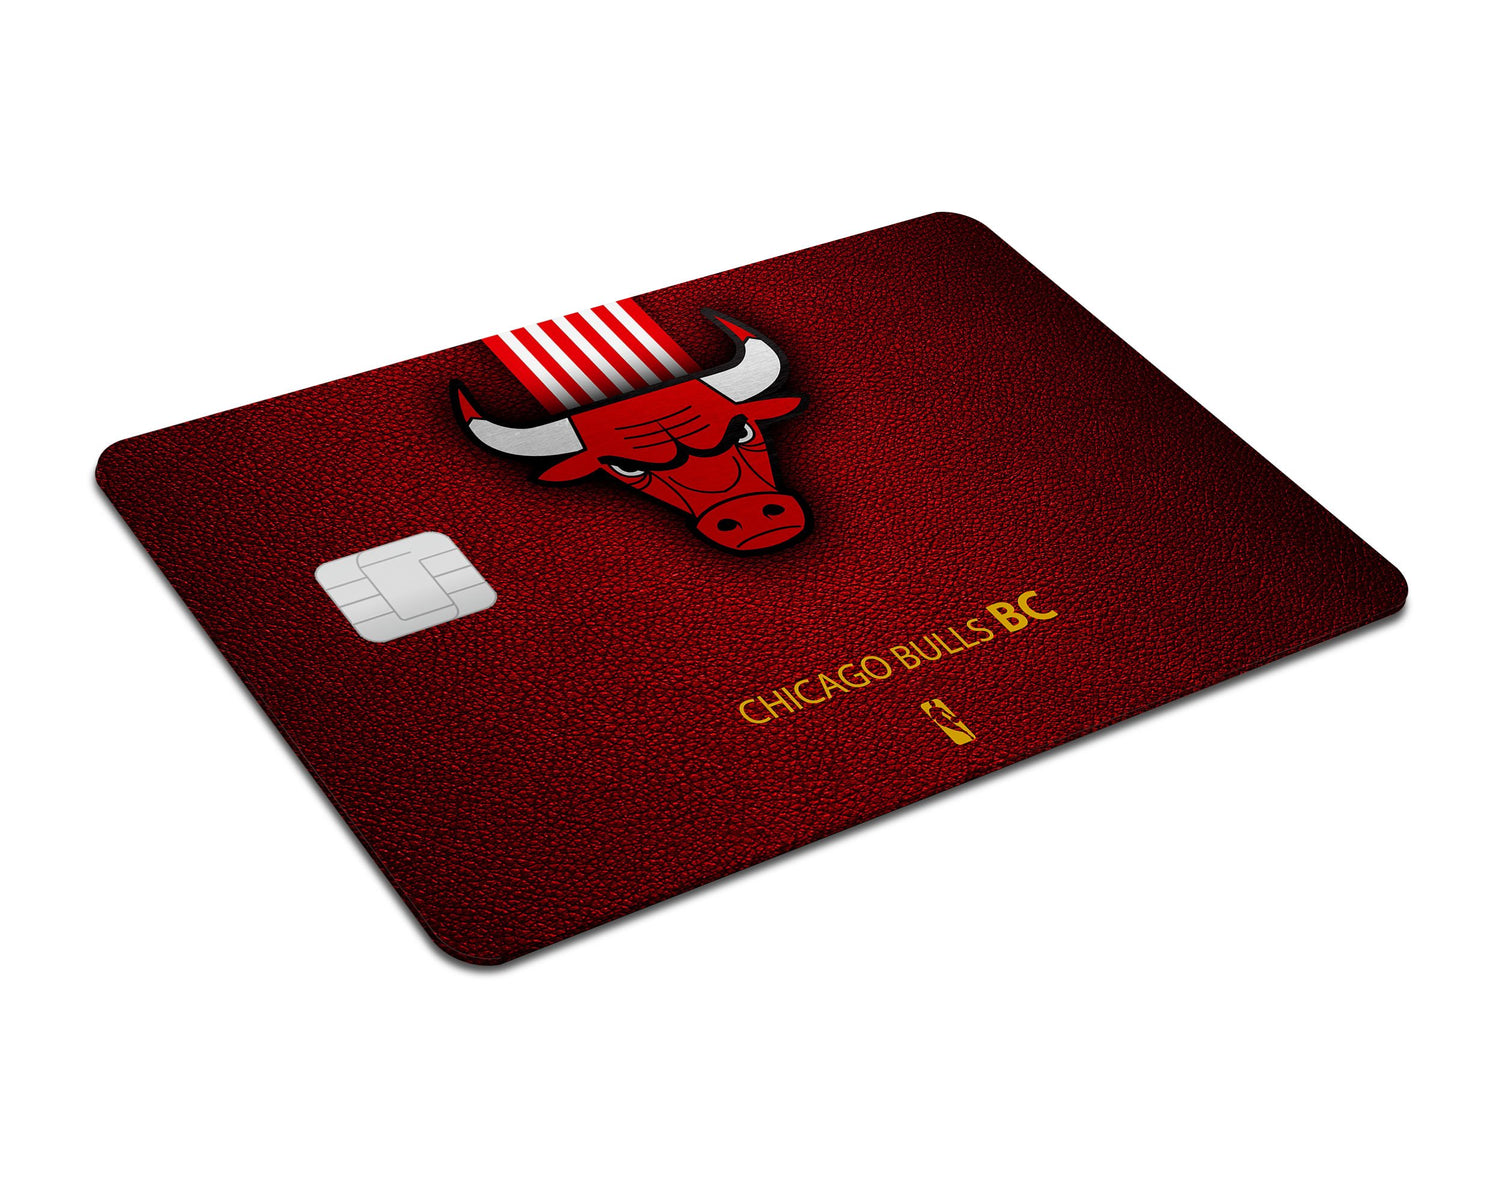 Flex Designs Credit Card Chicago Bulls Full Skins - Sports Basketball & Debit Card Skin